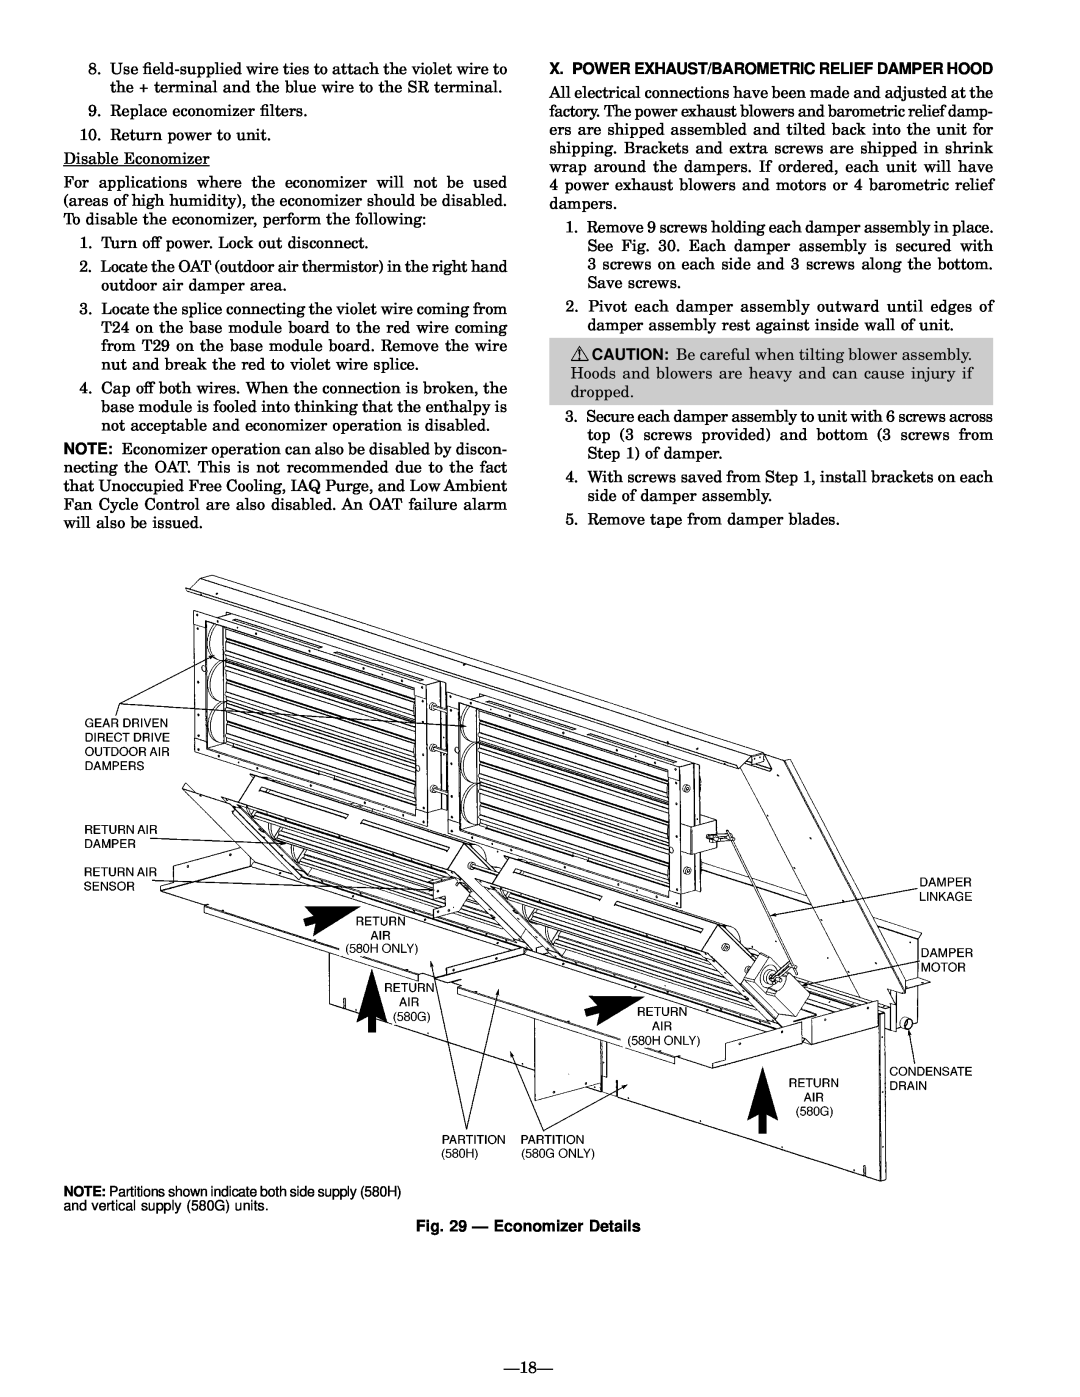 Bryant 580G manual X. Power Exhaust/Barometric Relief Damper Hood, Ð Economizer Details 